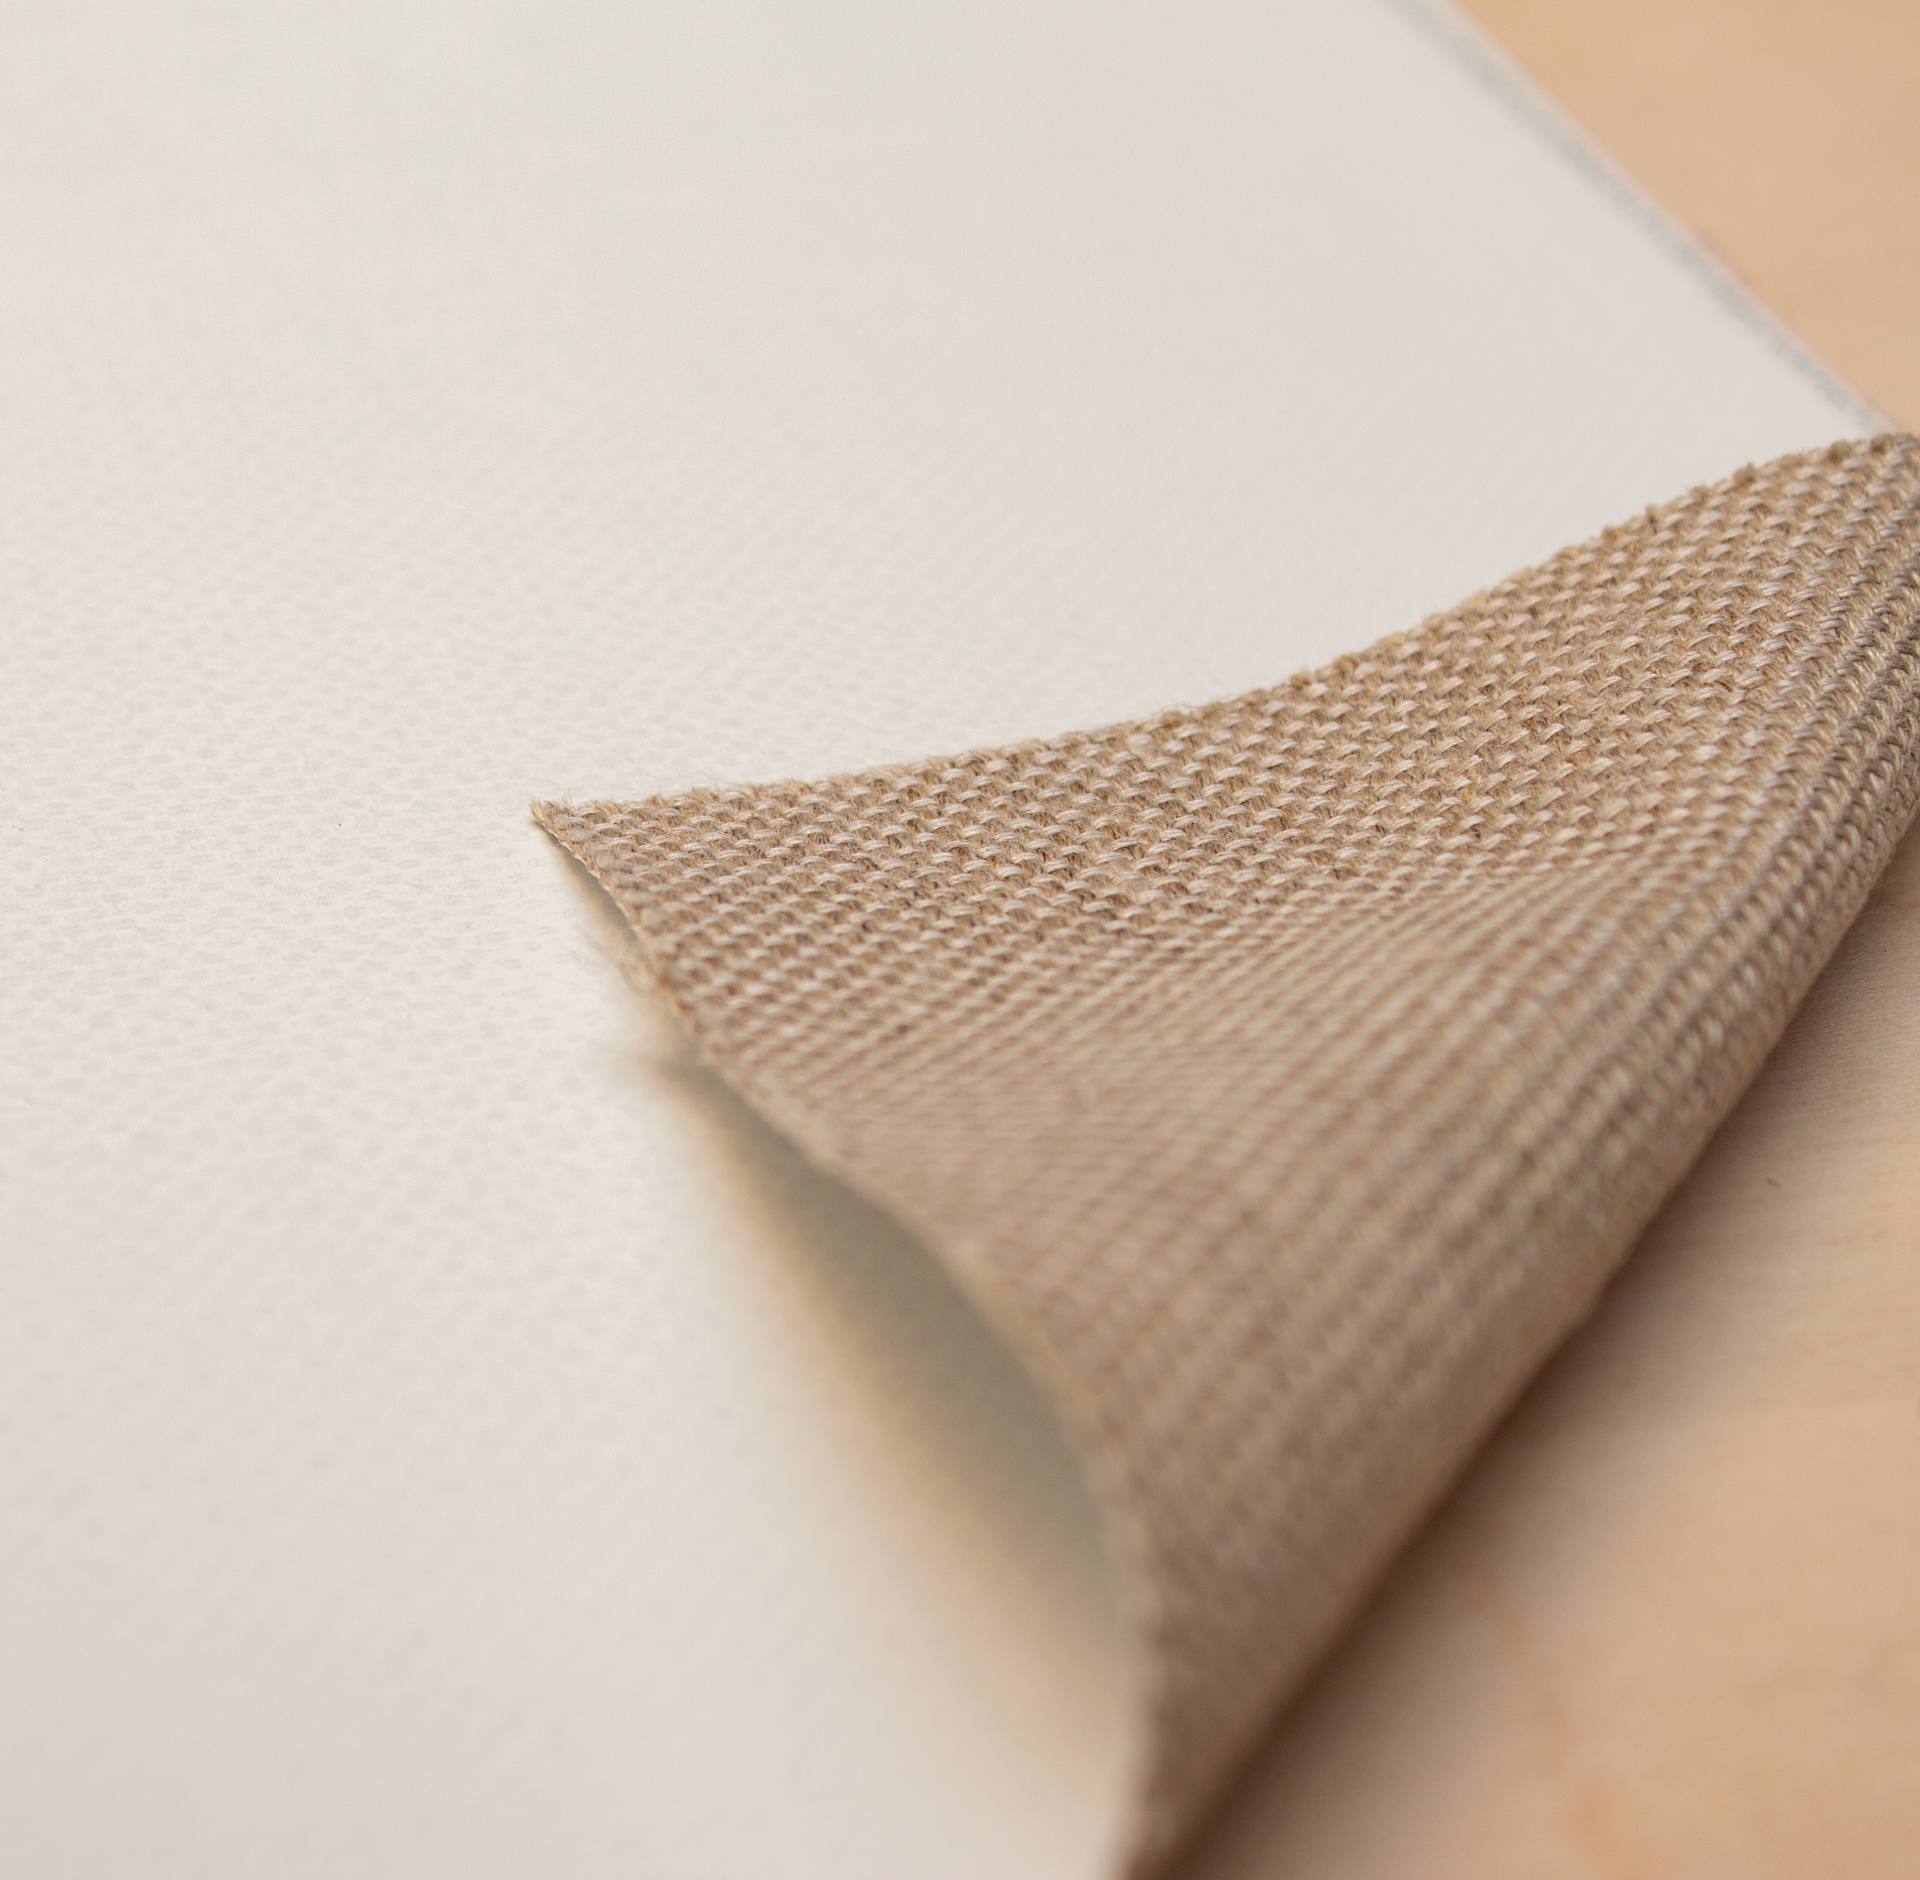 primed linen 460 g/m²  white, 2.10 m width, medium- coarse, No. 18591